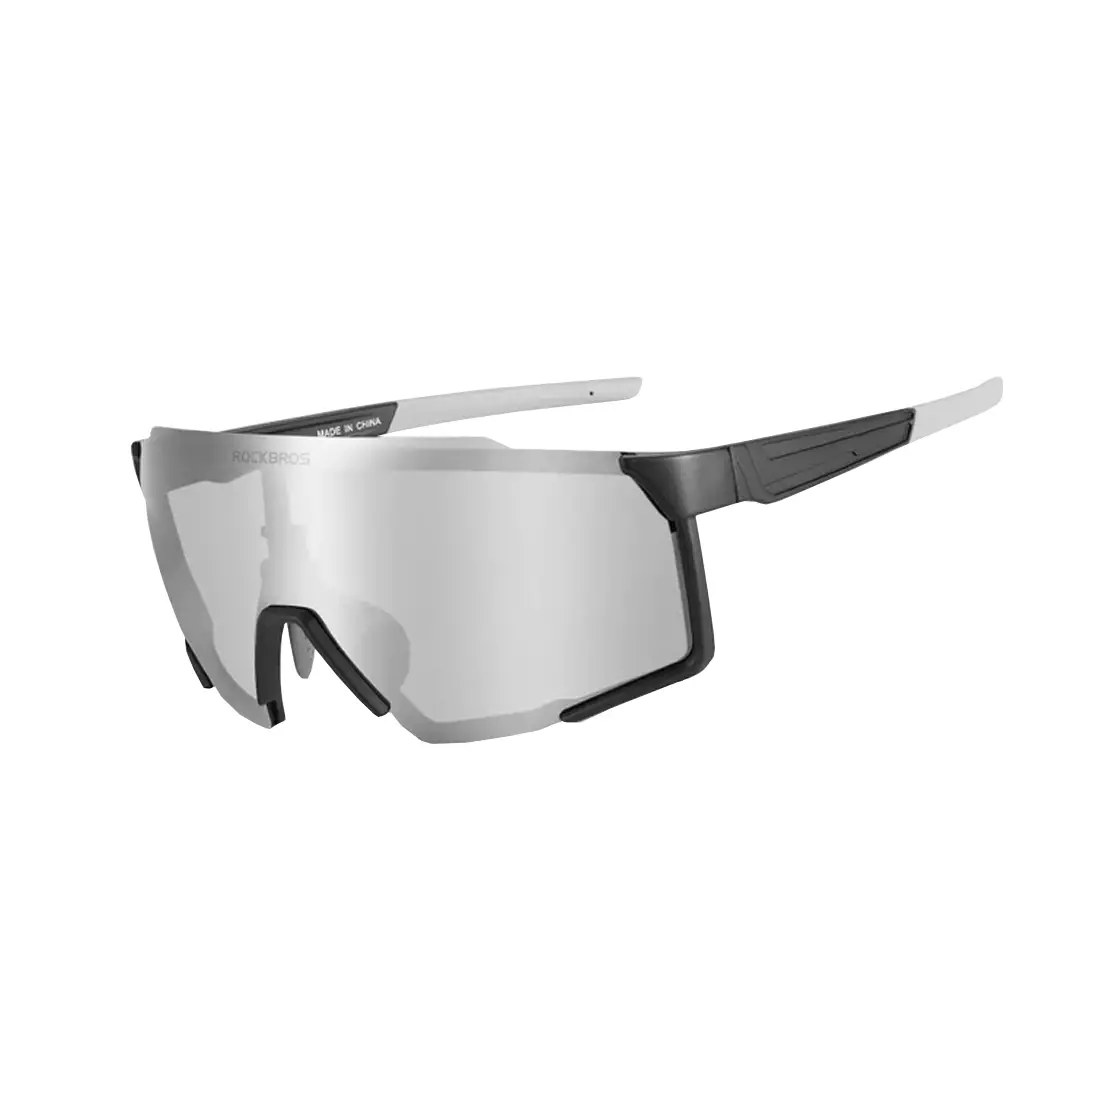 Rockbros SP22BK bicycle / sports glasses with polarized lens black-grey